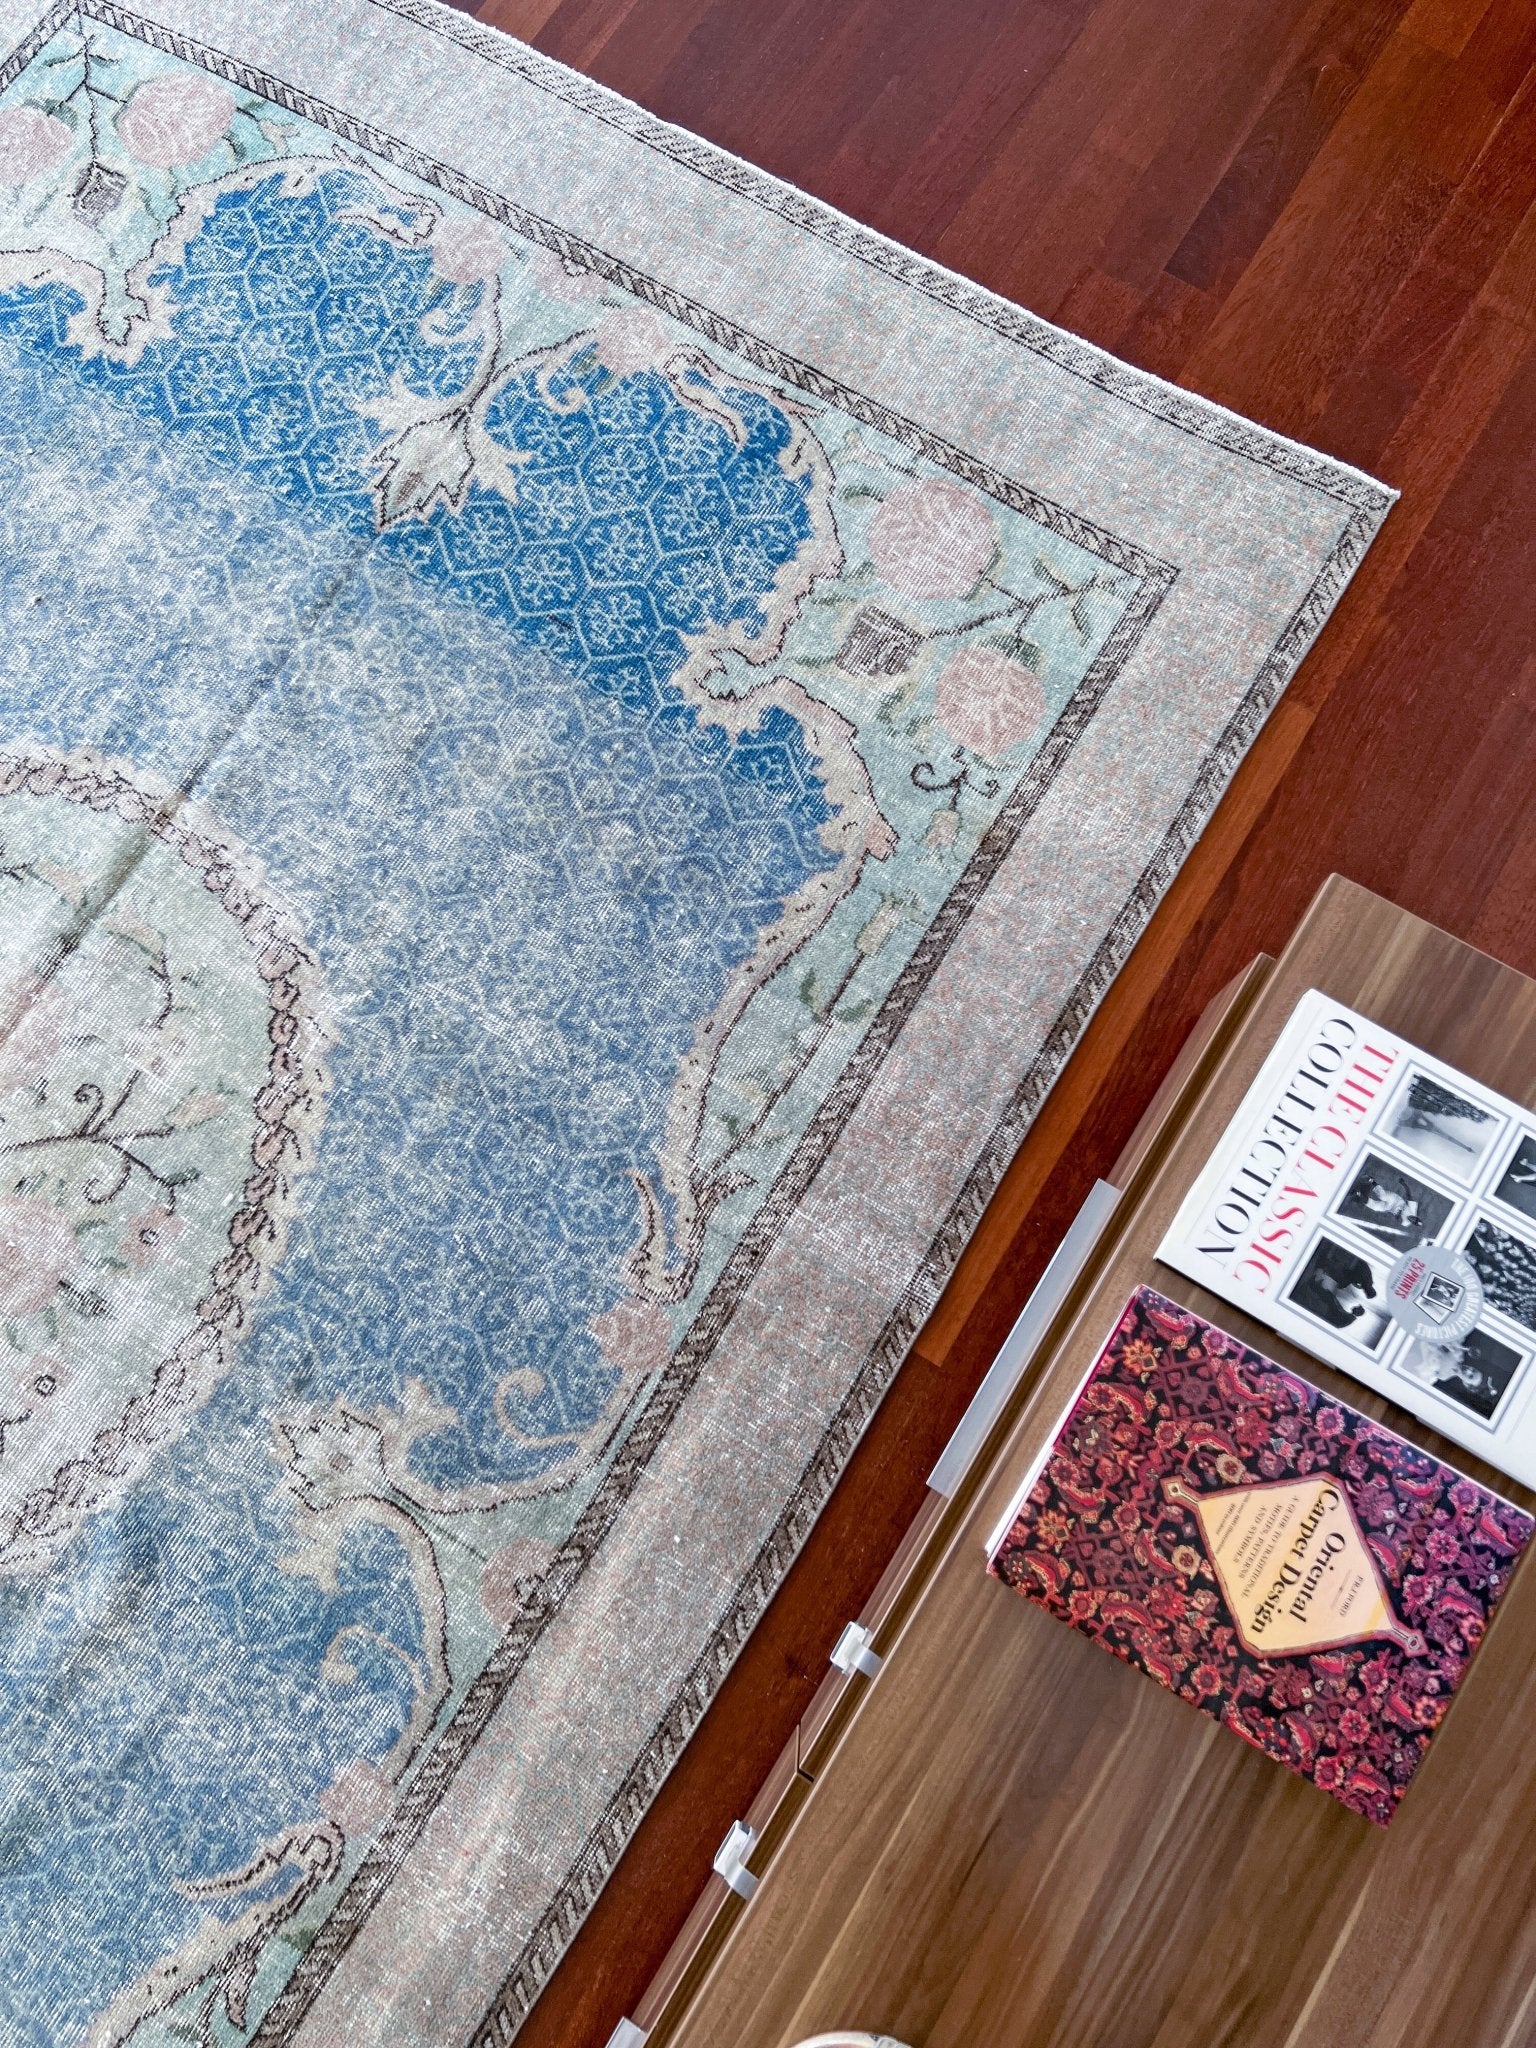 Turkish rug shop san francisco bay area. Vintage washed buy oriental rug online california toronto canada